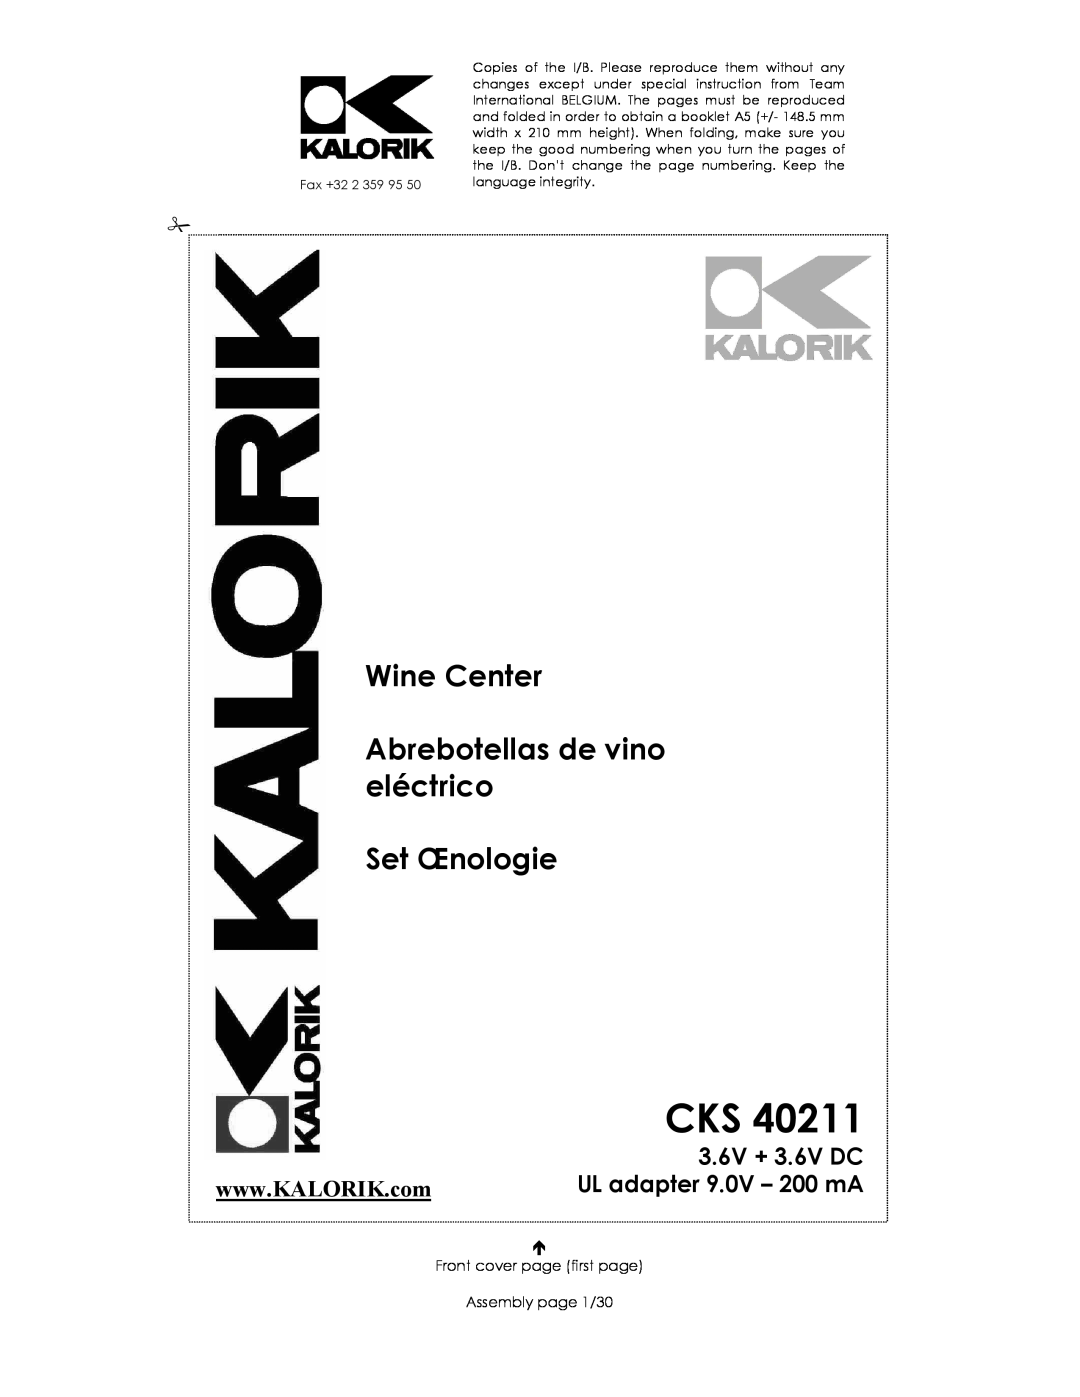 Kalorik CKS 40211 manual 3.6V + 3.6V DC, Wine Center Abrebotellas de vino eléctrico Set Œnologie, UL adapter 9.0V - 200 mA 